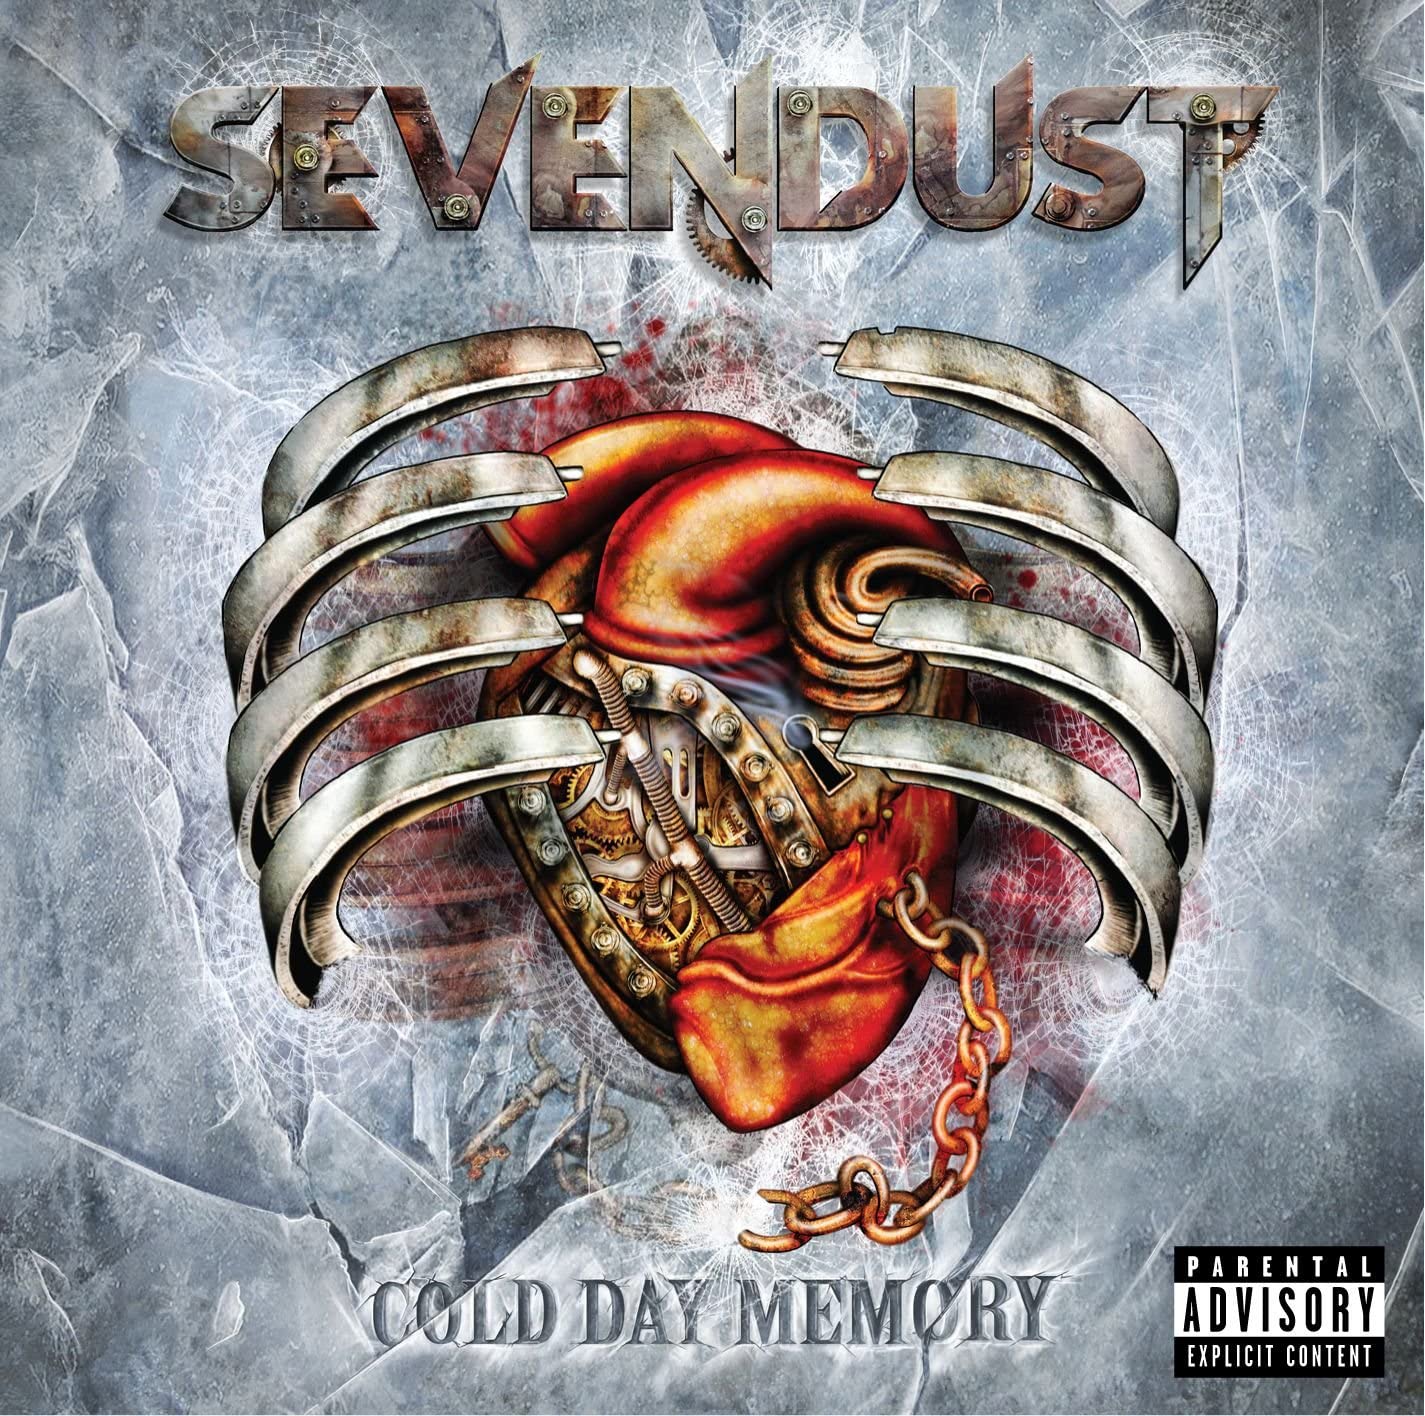 Sevendust - Cold Day Memory - CD/DVD